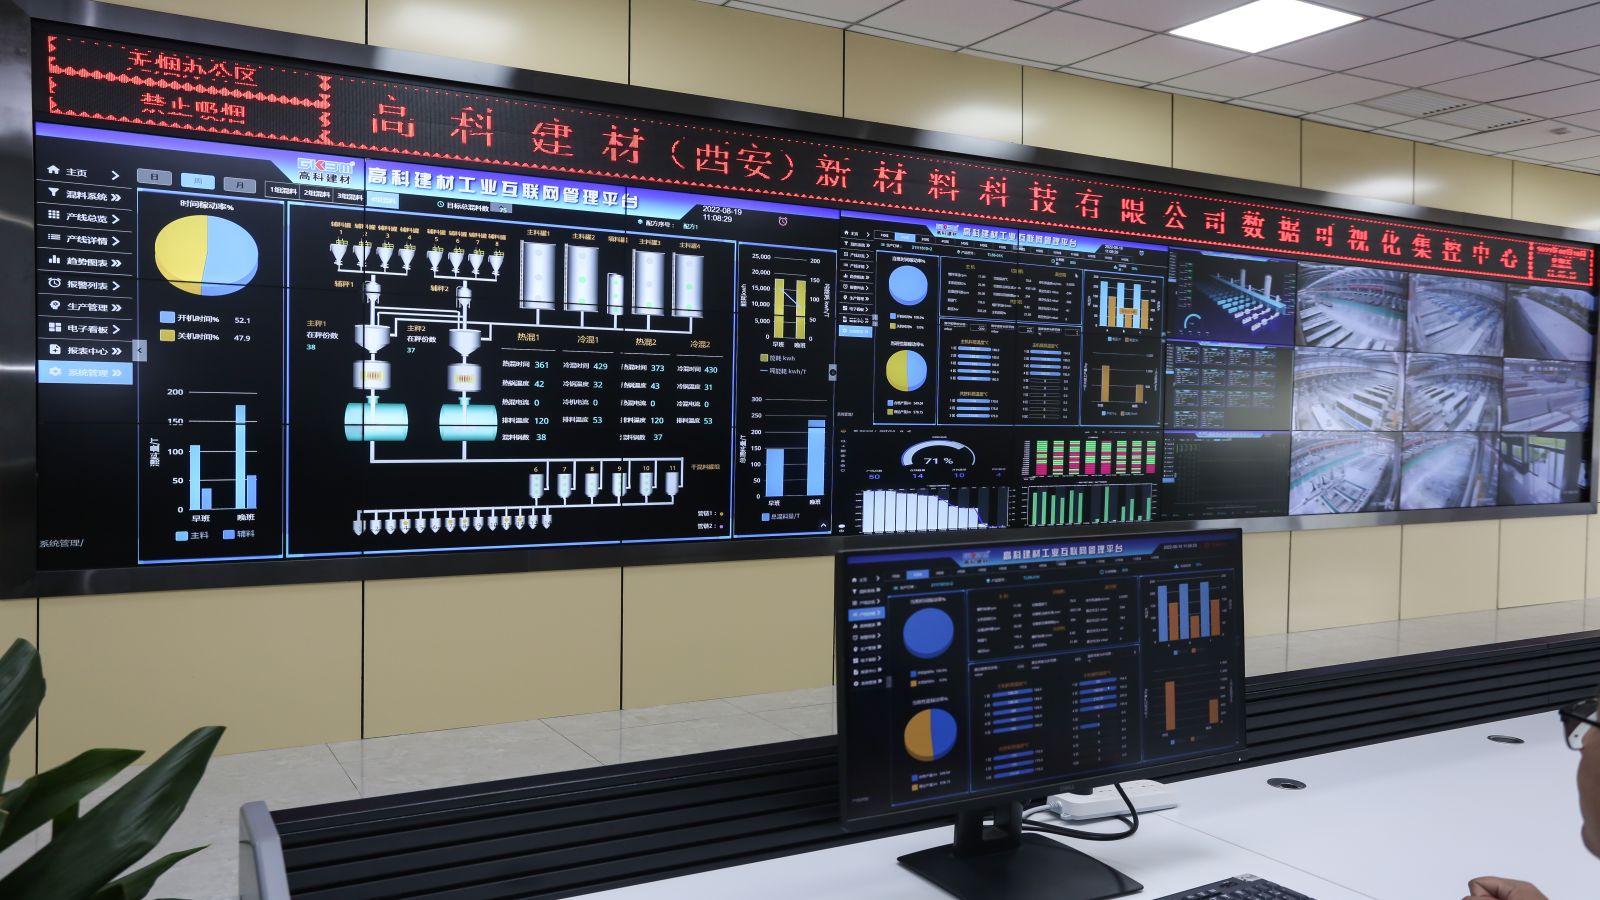 GKBM Centralized Control Center